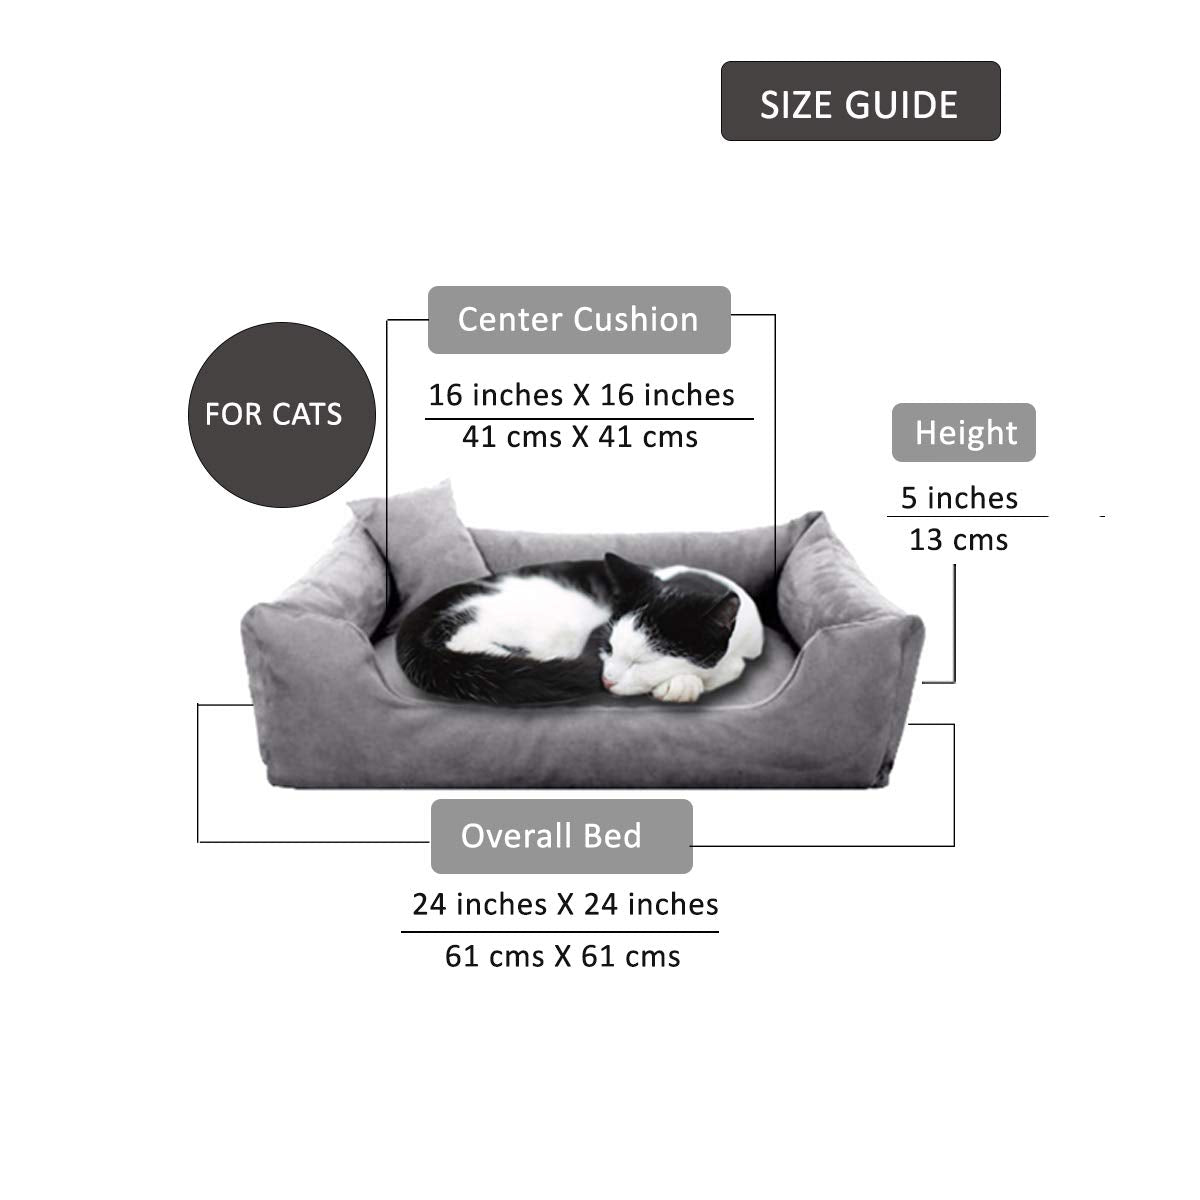 Grey - Pet Royale Velvet Cat Bed